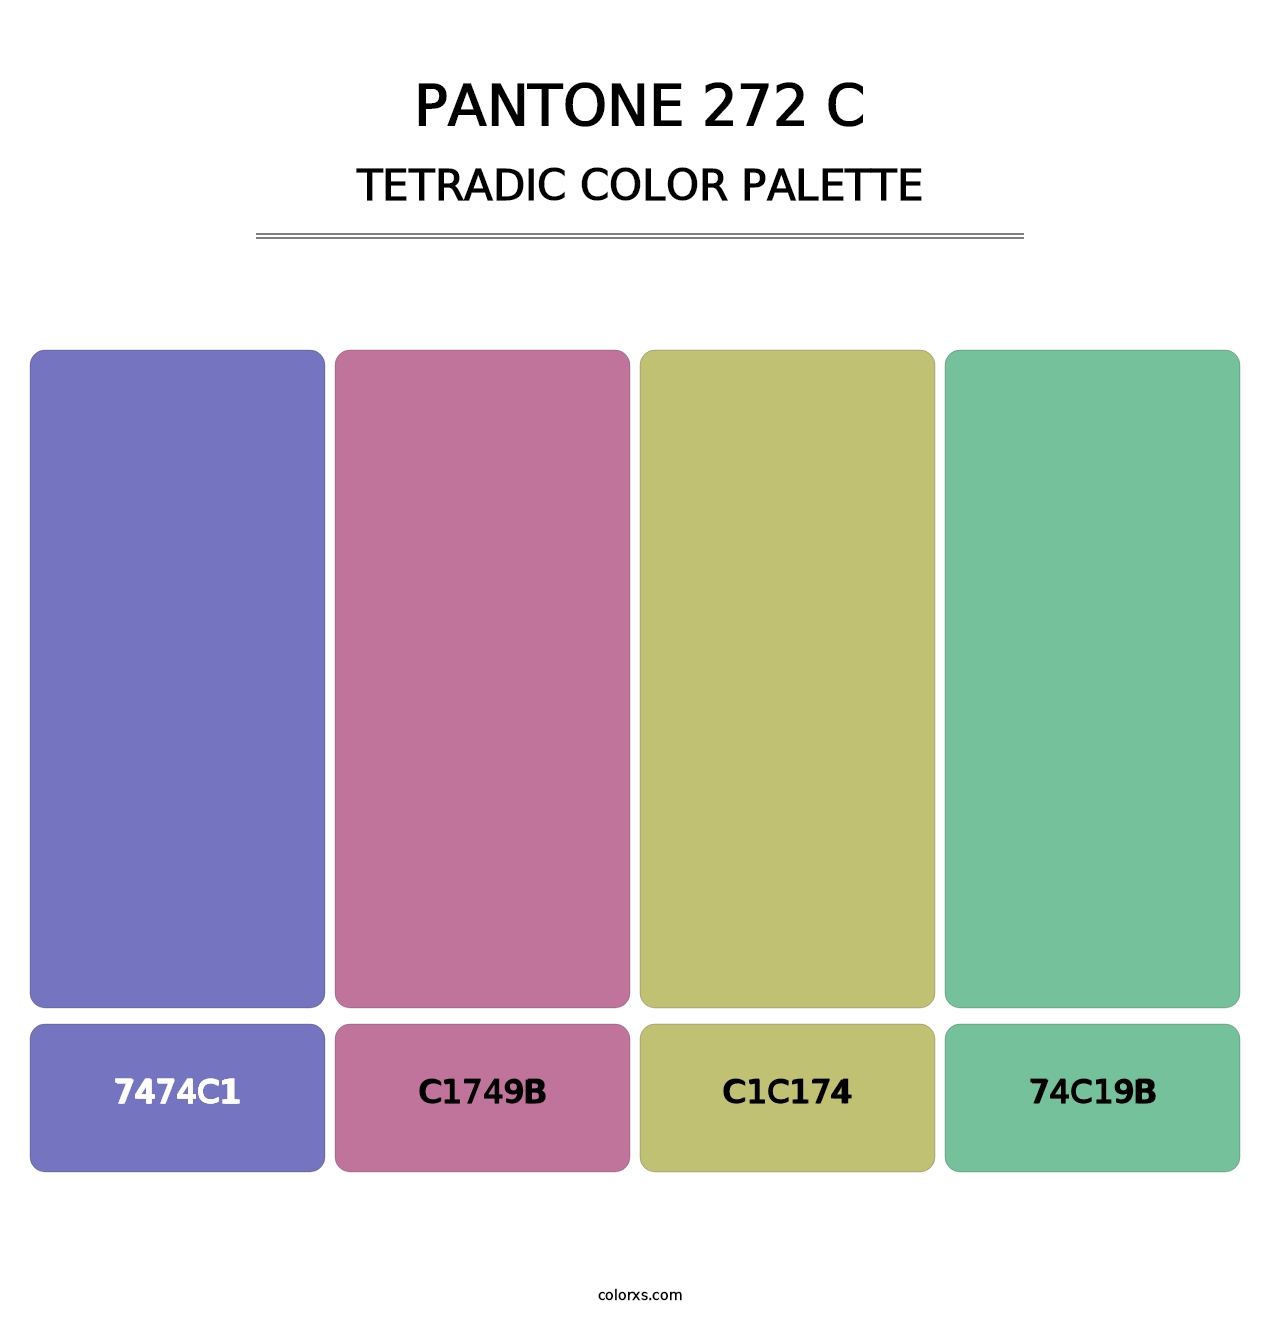 PANTONE 272 C - Tetradic Color Palette